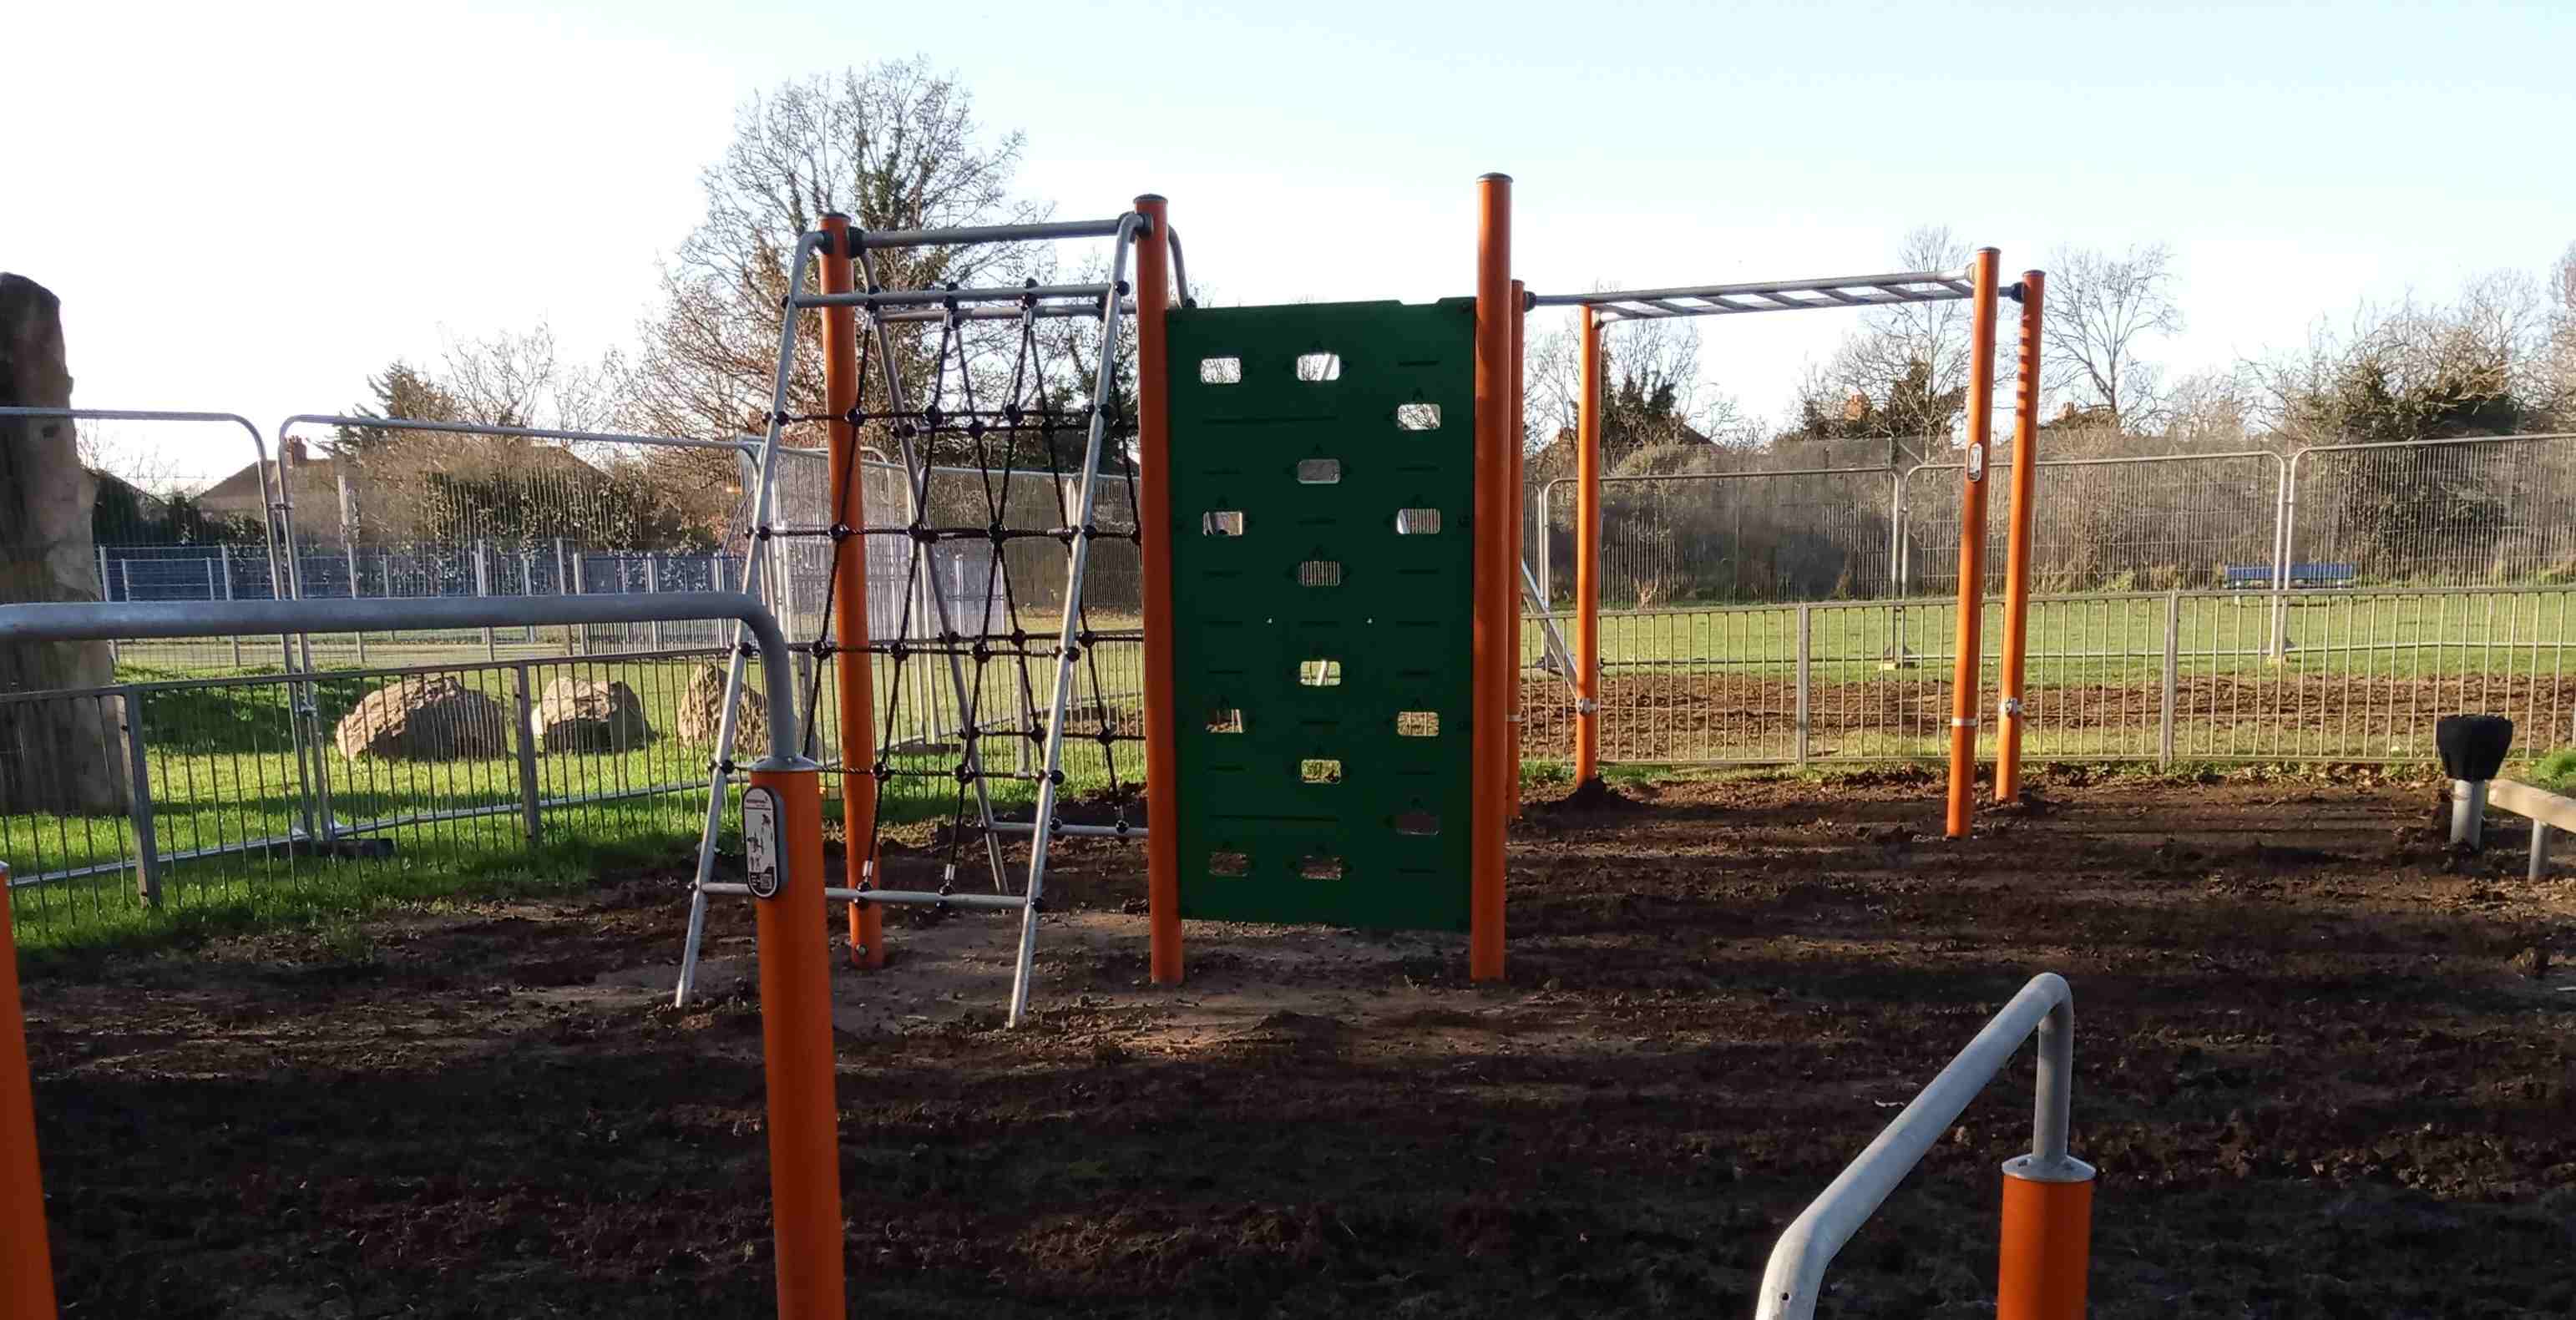 Courage Park playground undergoes exciting redevelopment